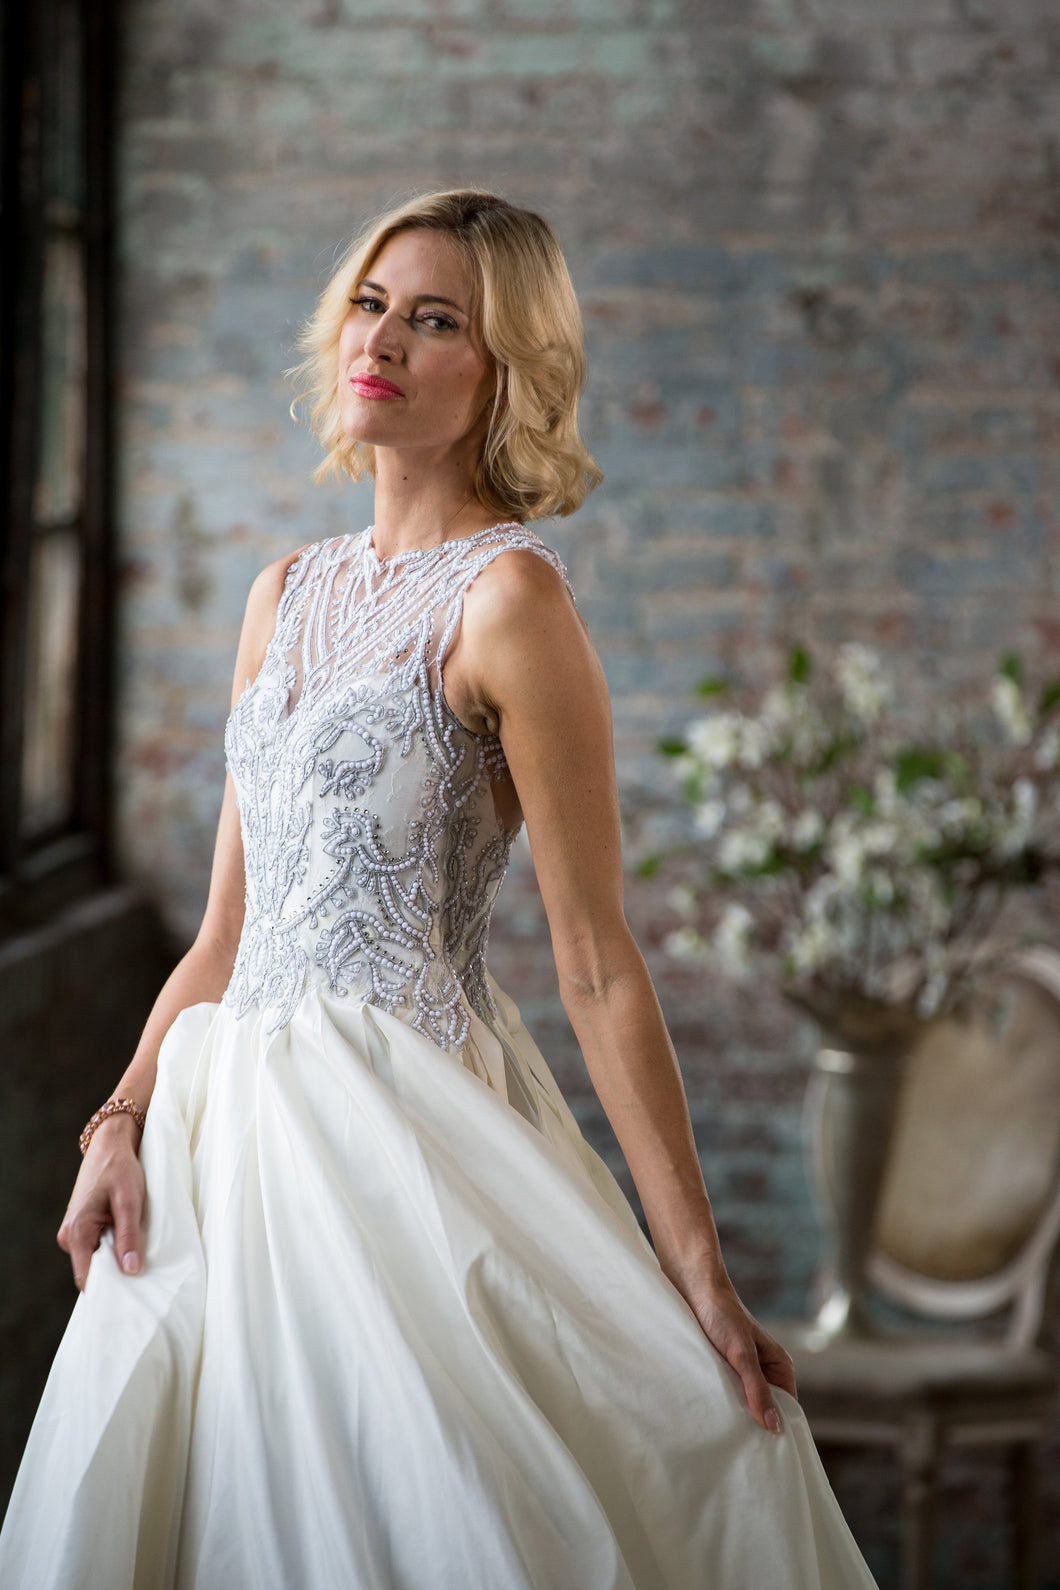 Veluz Reyes 'Bettina' size 4 sample wedding dress front view on model